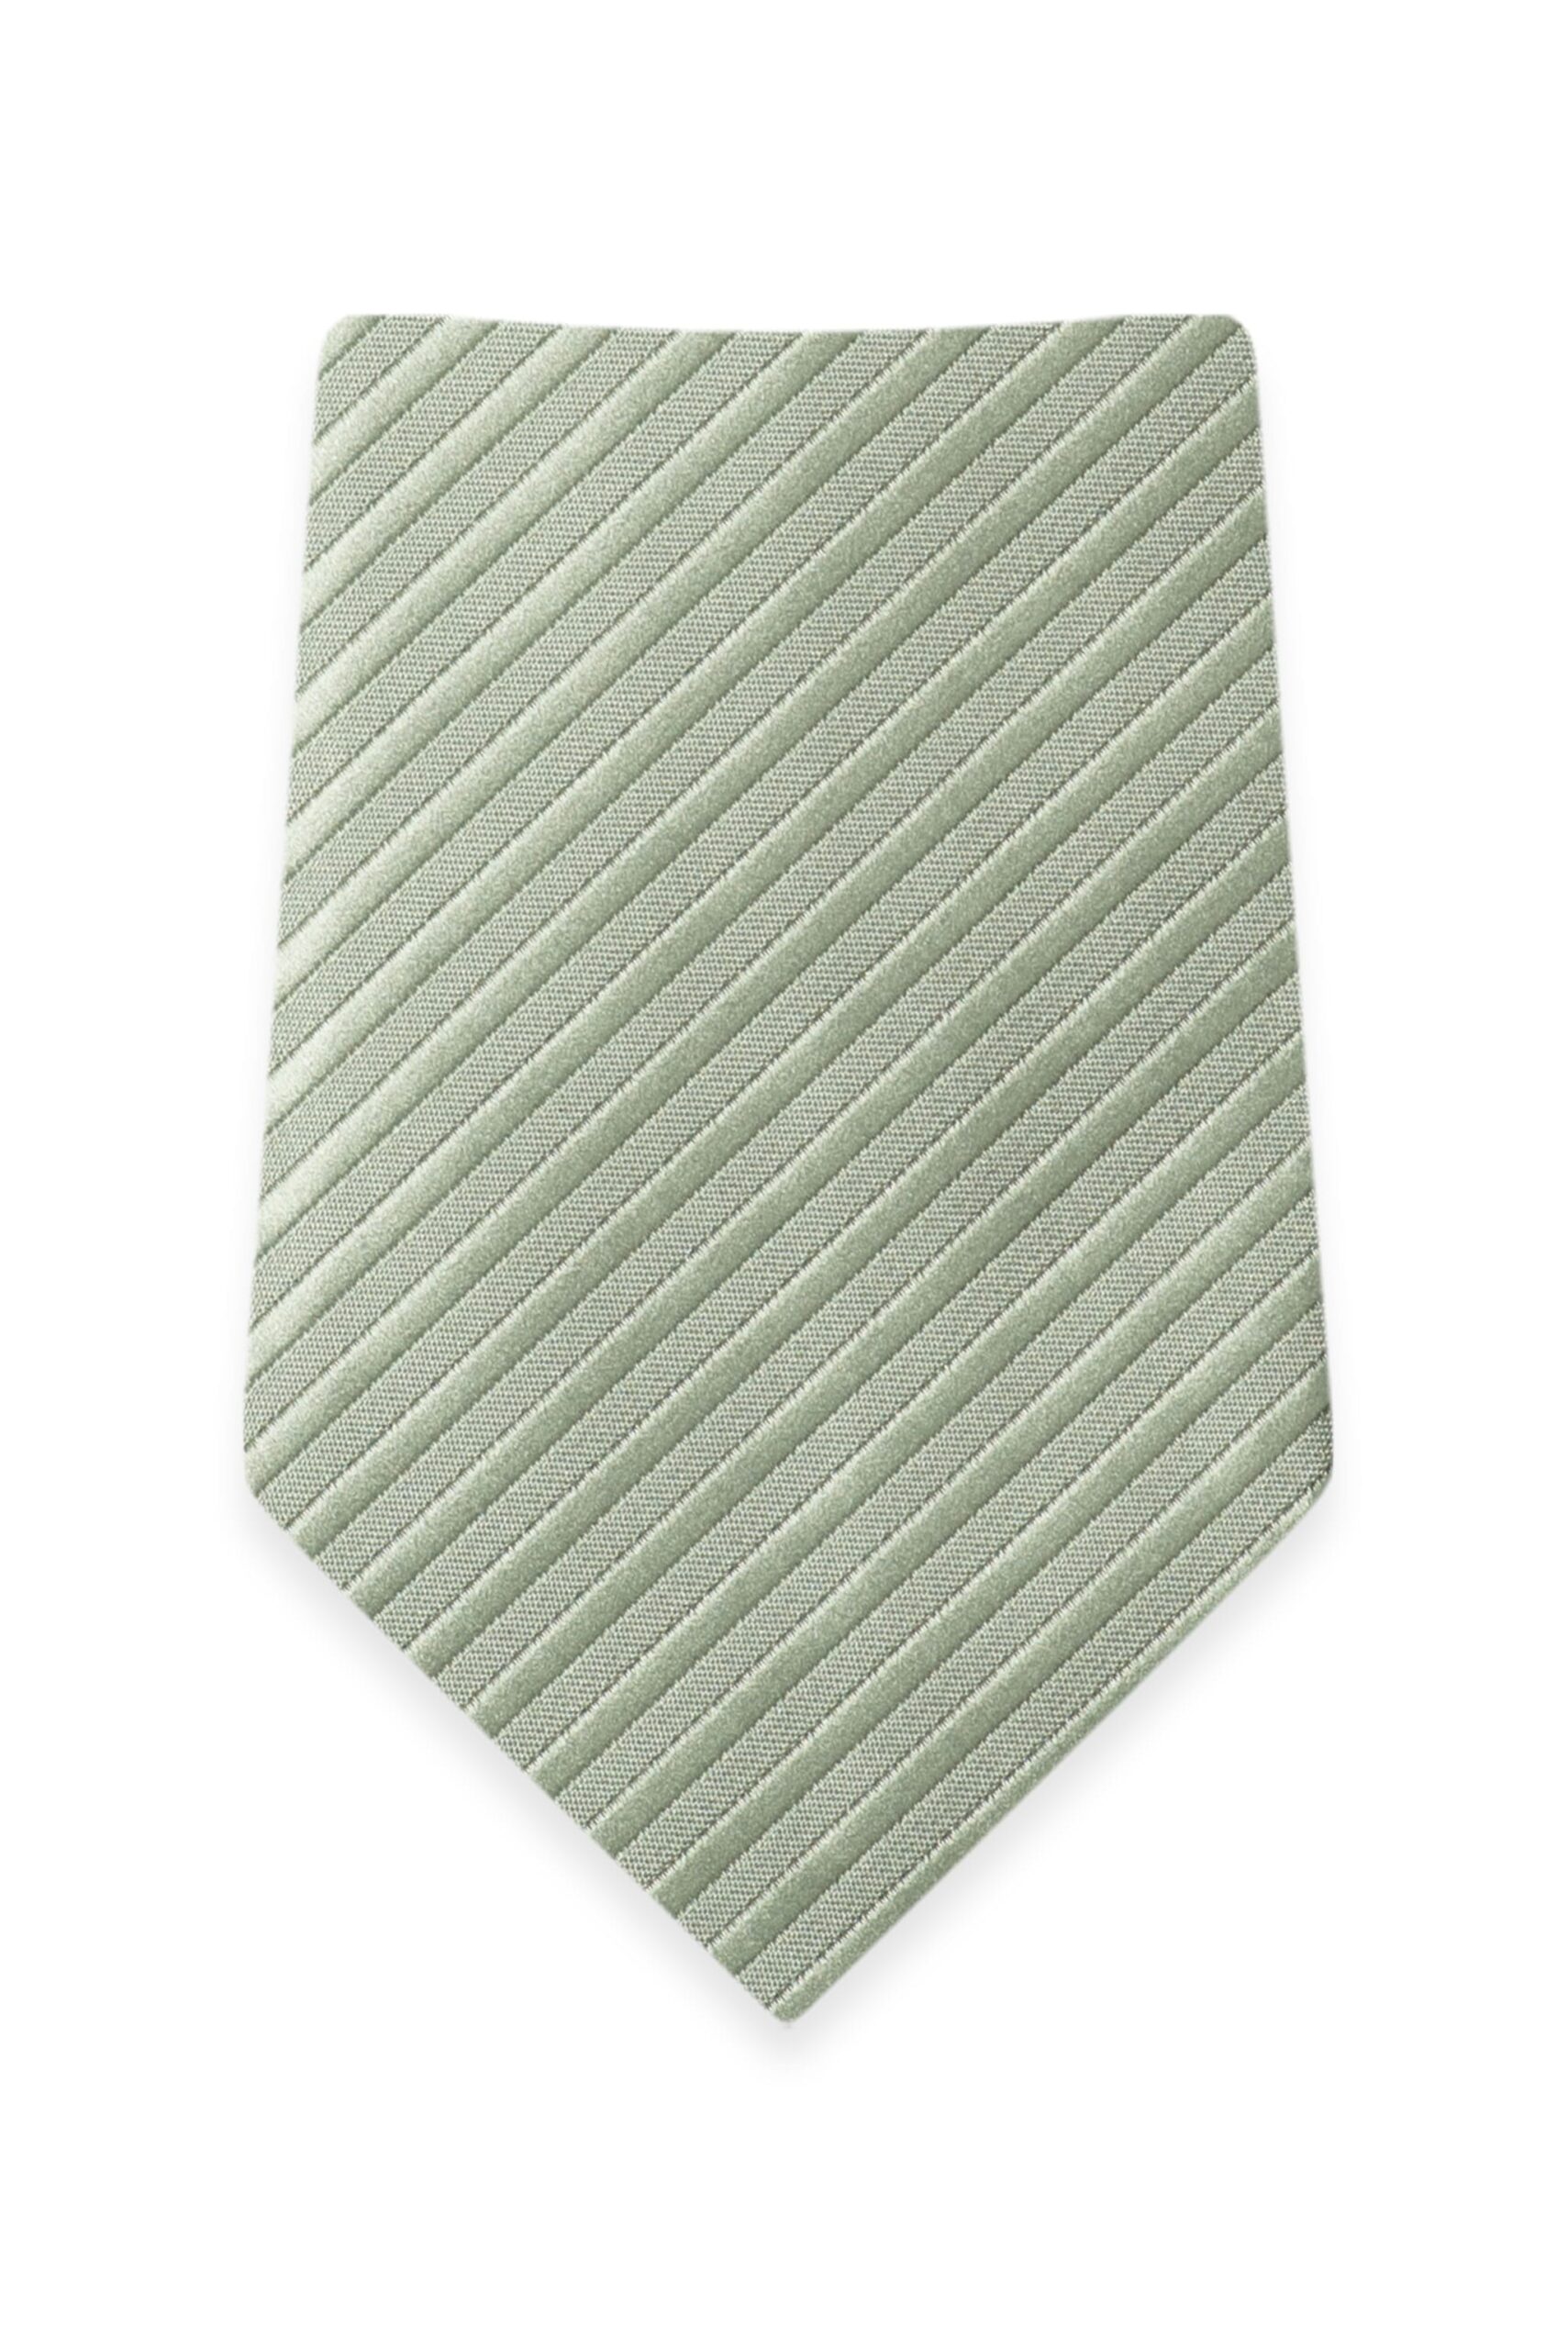 Striped Sage Self-Tie Windsor Tie 1